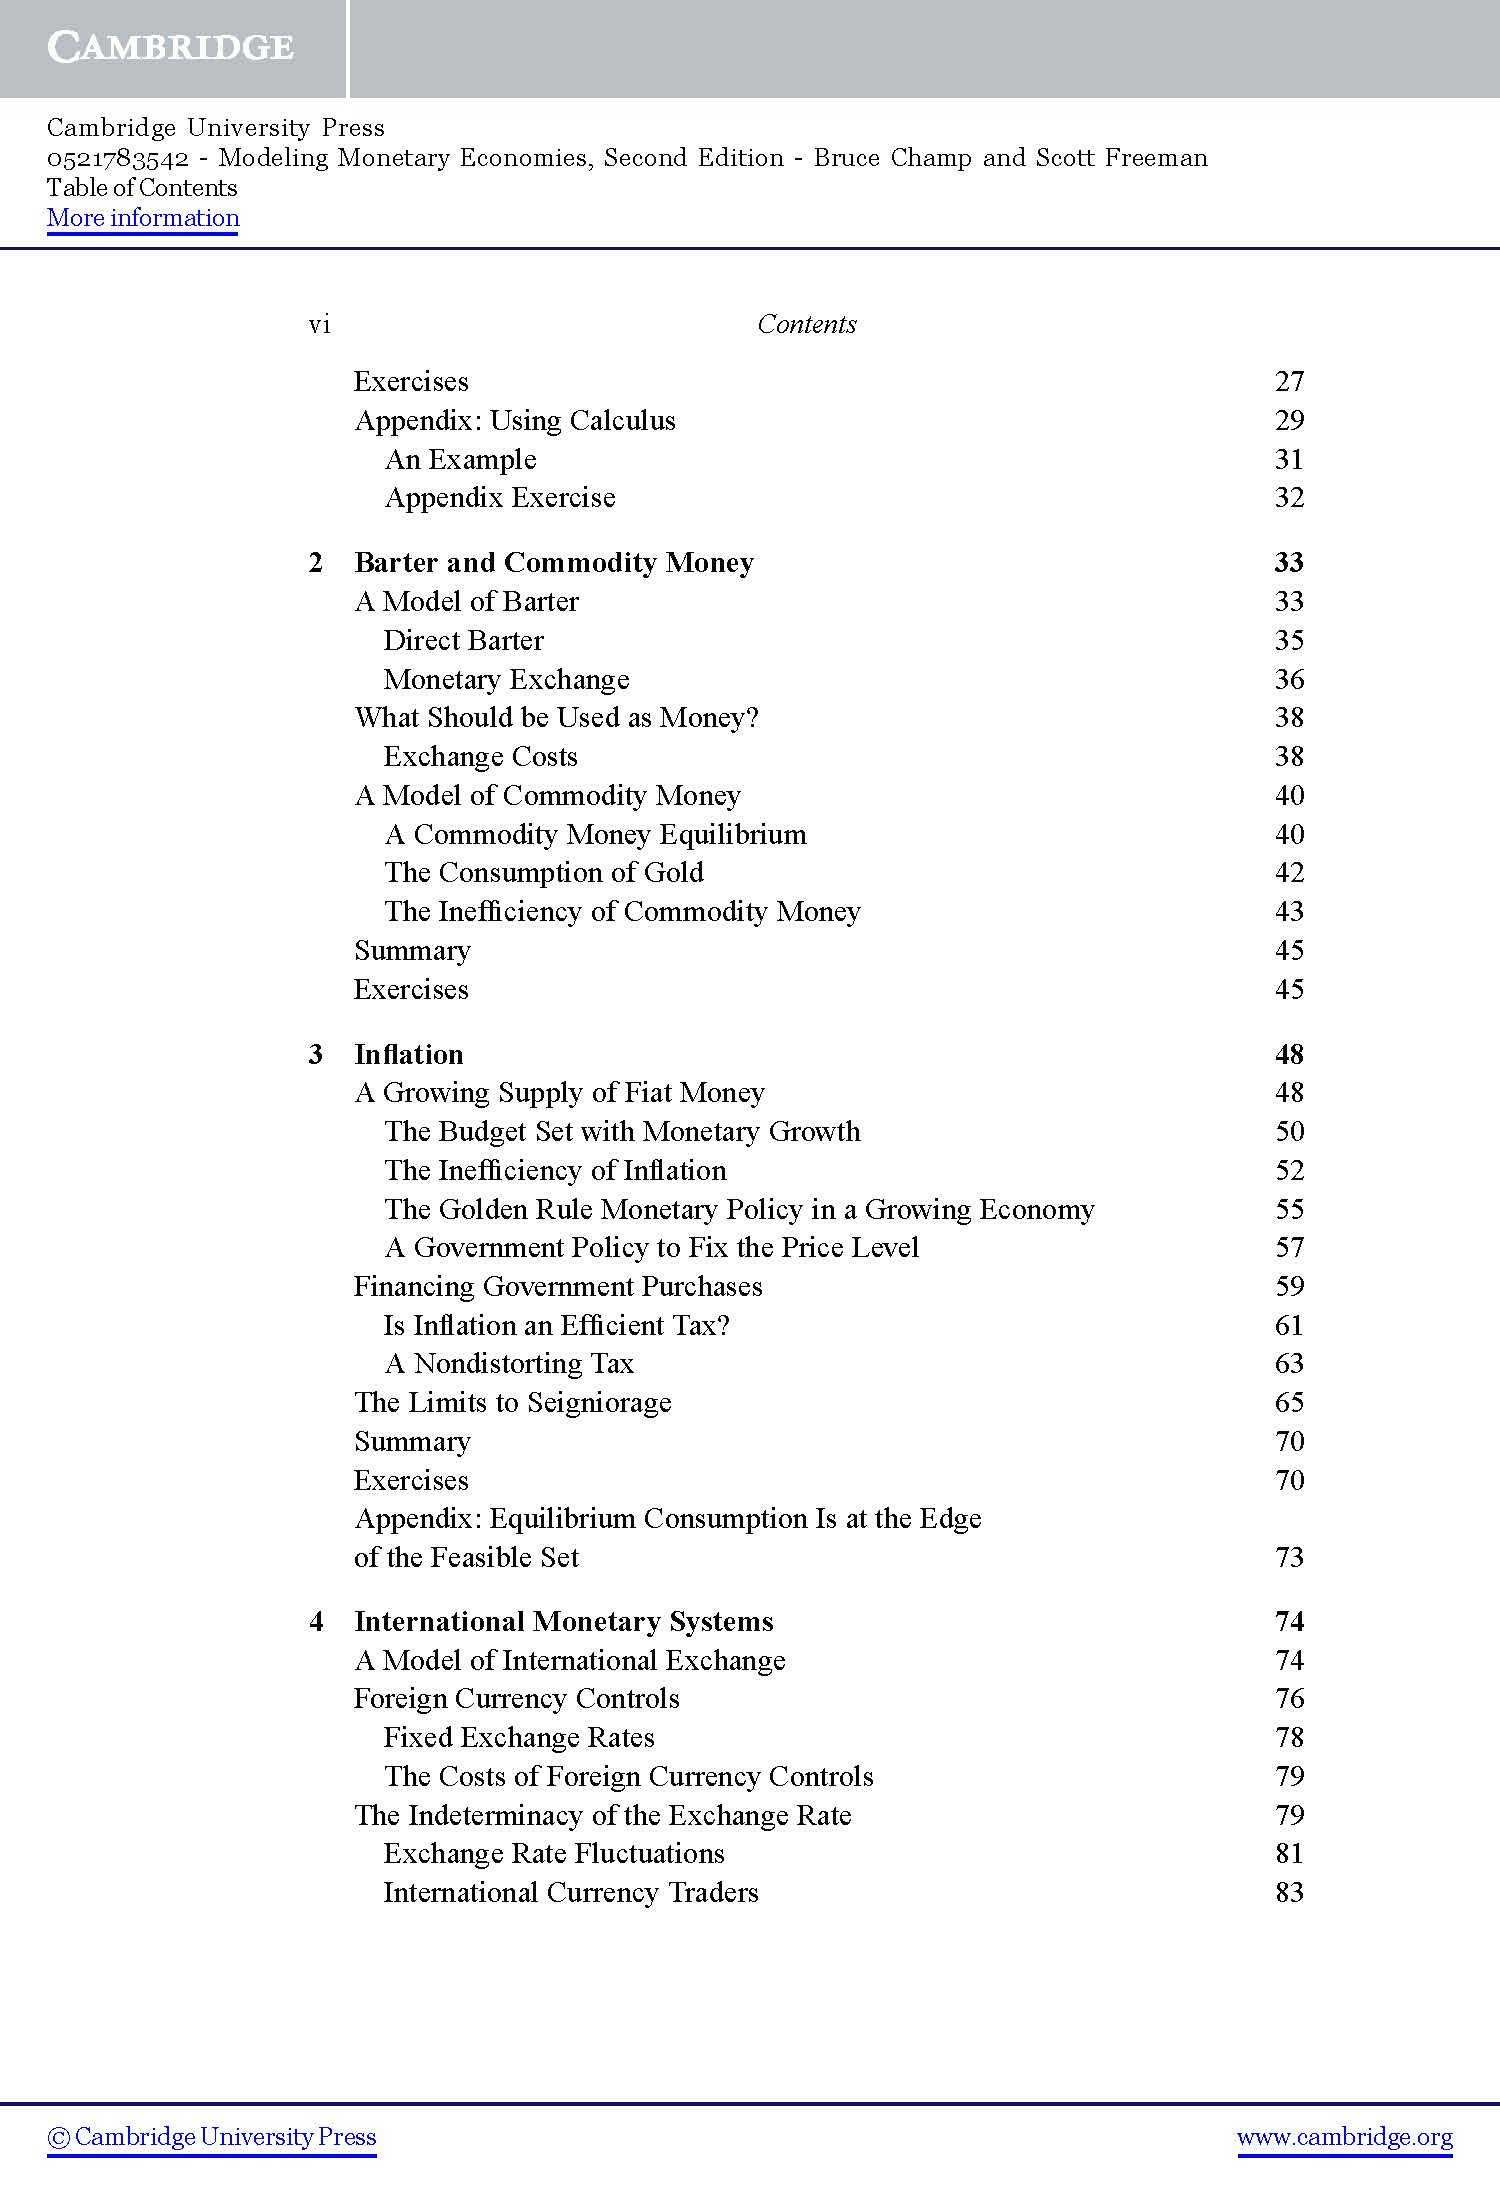 Modeling Monetary Economies: Champ, Bruce/ Freeman, Scott 2nd edition